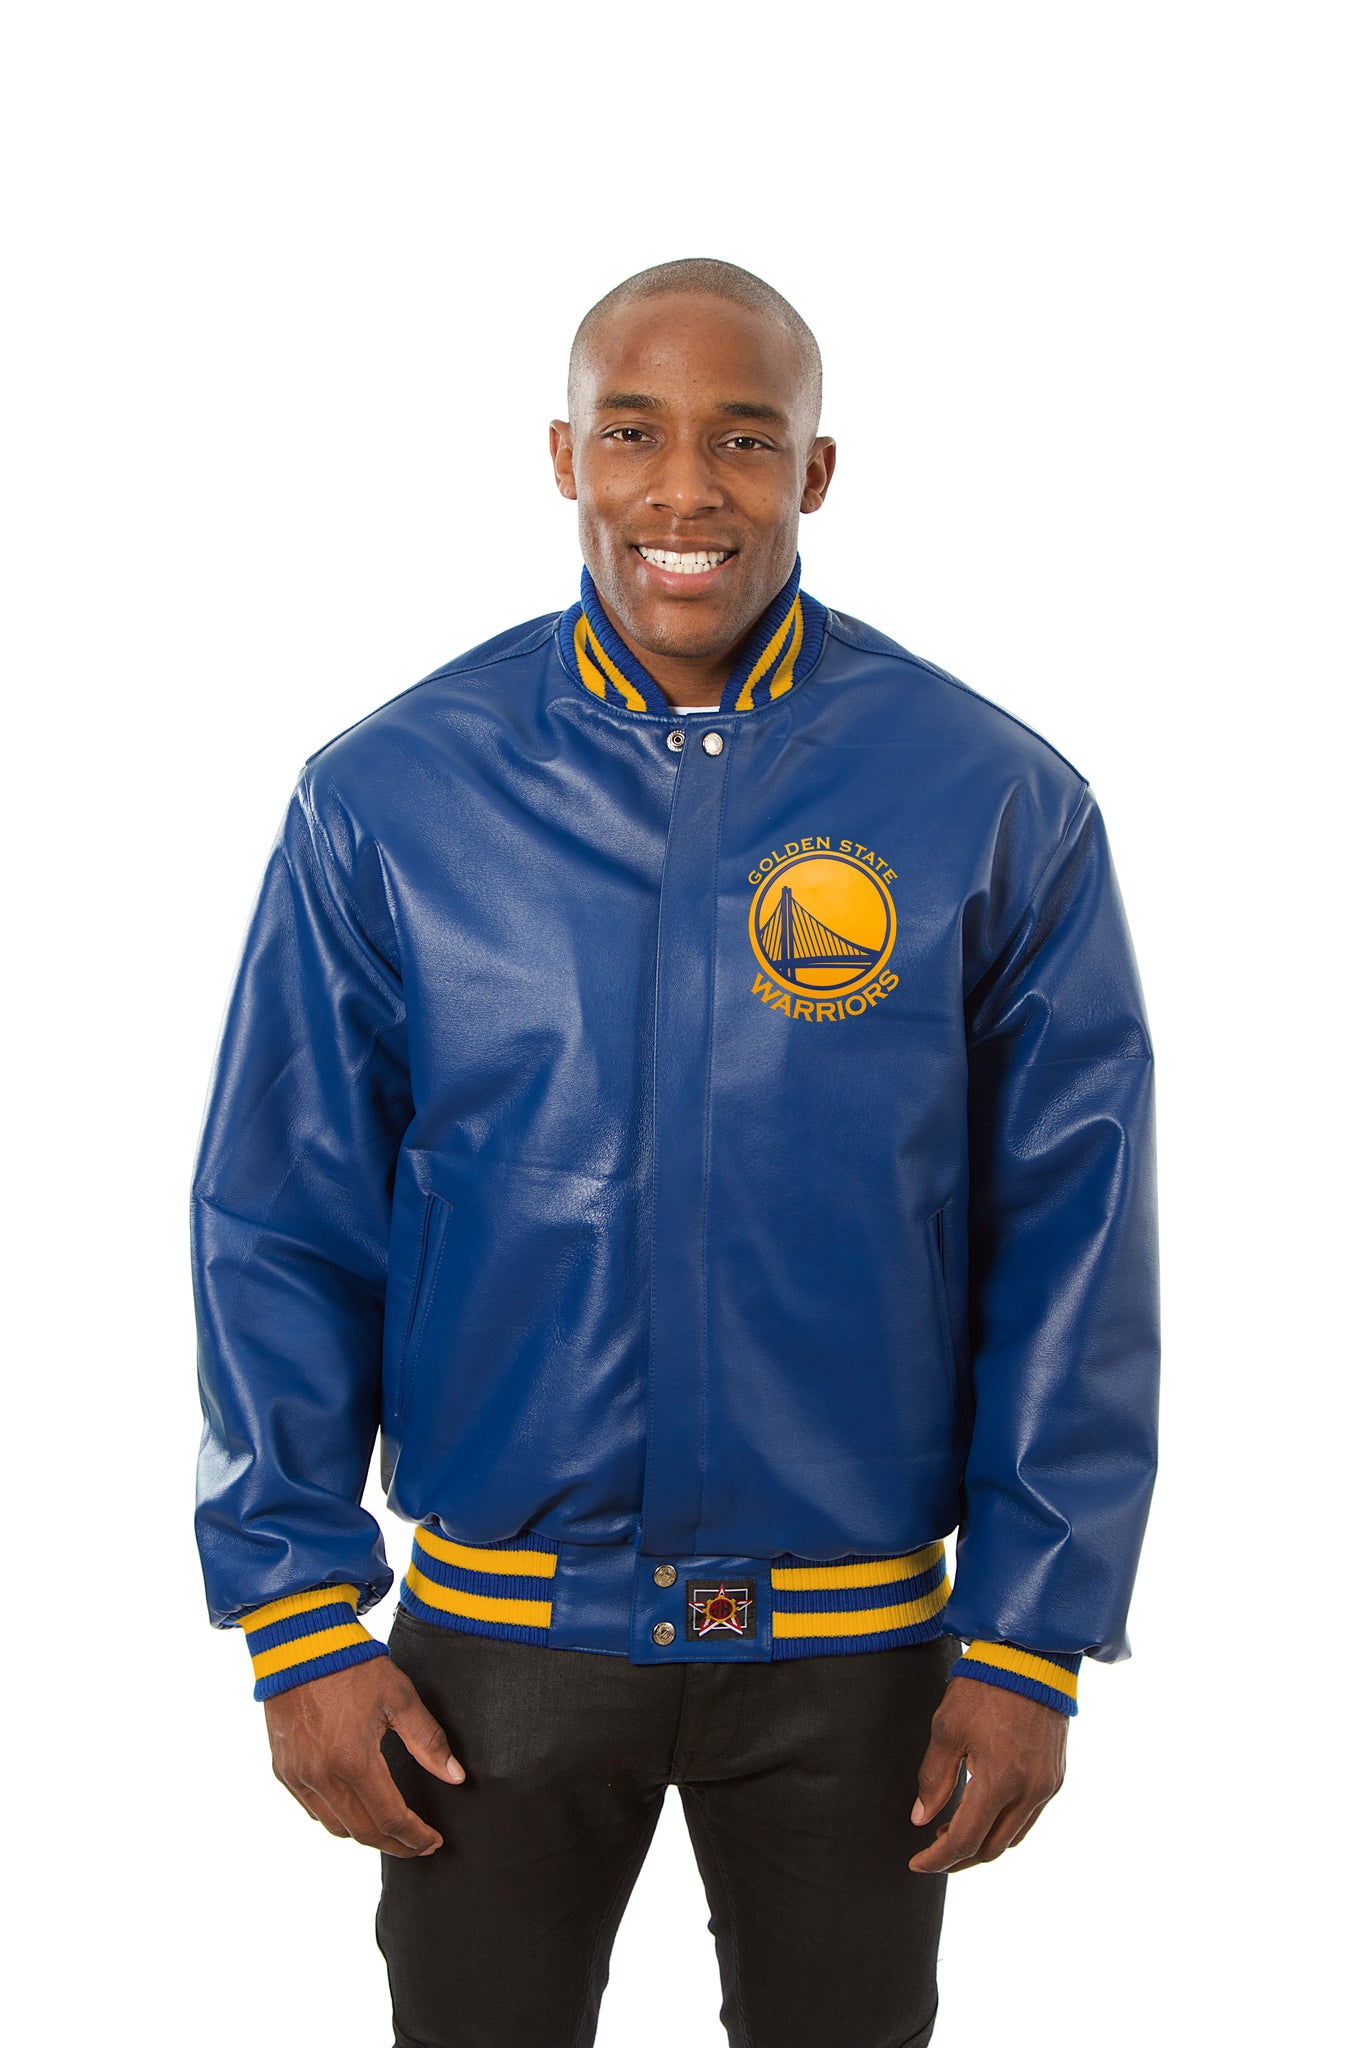 Golden State Warriors Varsity Jacket